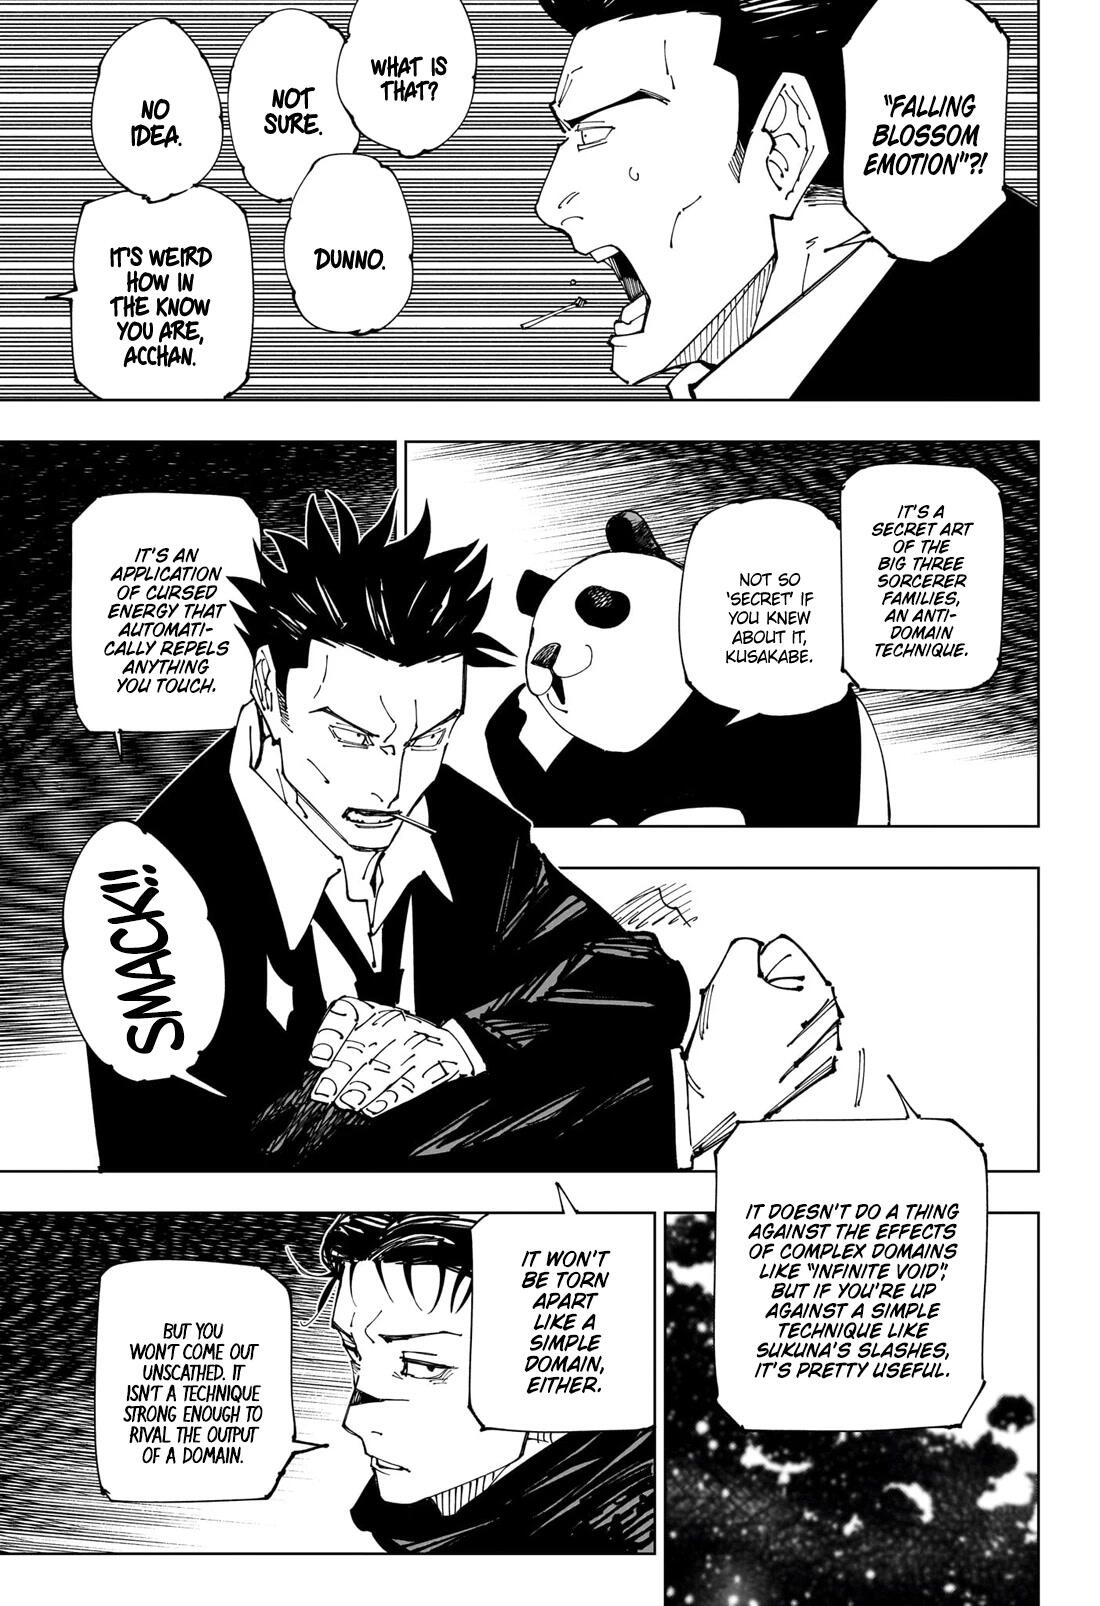 Jujutsu Kaisen Chapter 227: The Decisive Battle In The Uninhabited, Demon-Infested Shinjuku ⑤ page 18 - Mangakakalot